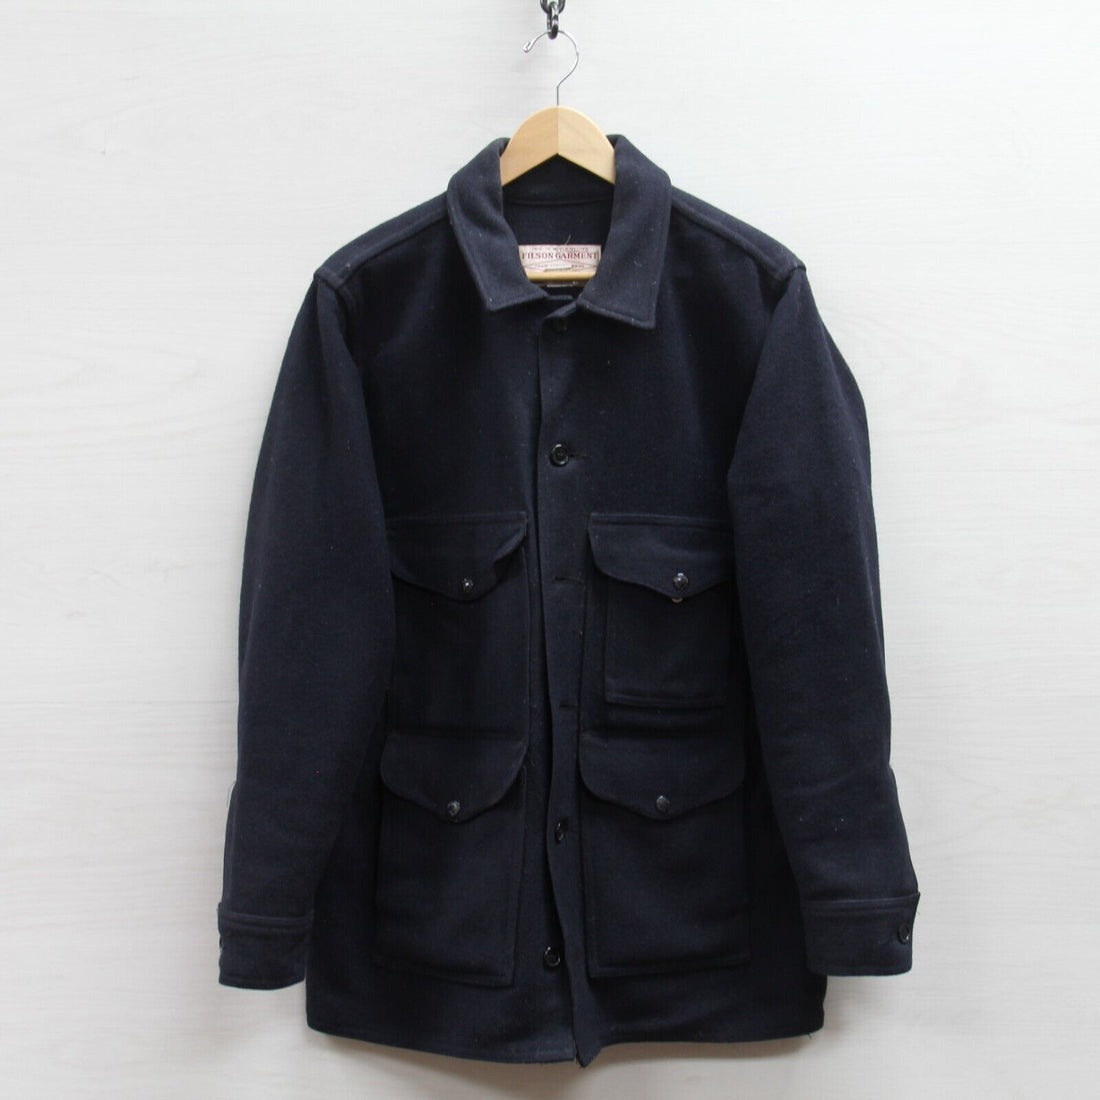 Vintage CC Filson Garment Wool Overcoat Jacket Size 40 Black Made USA